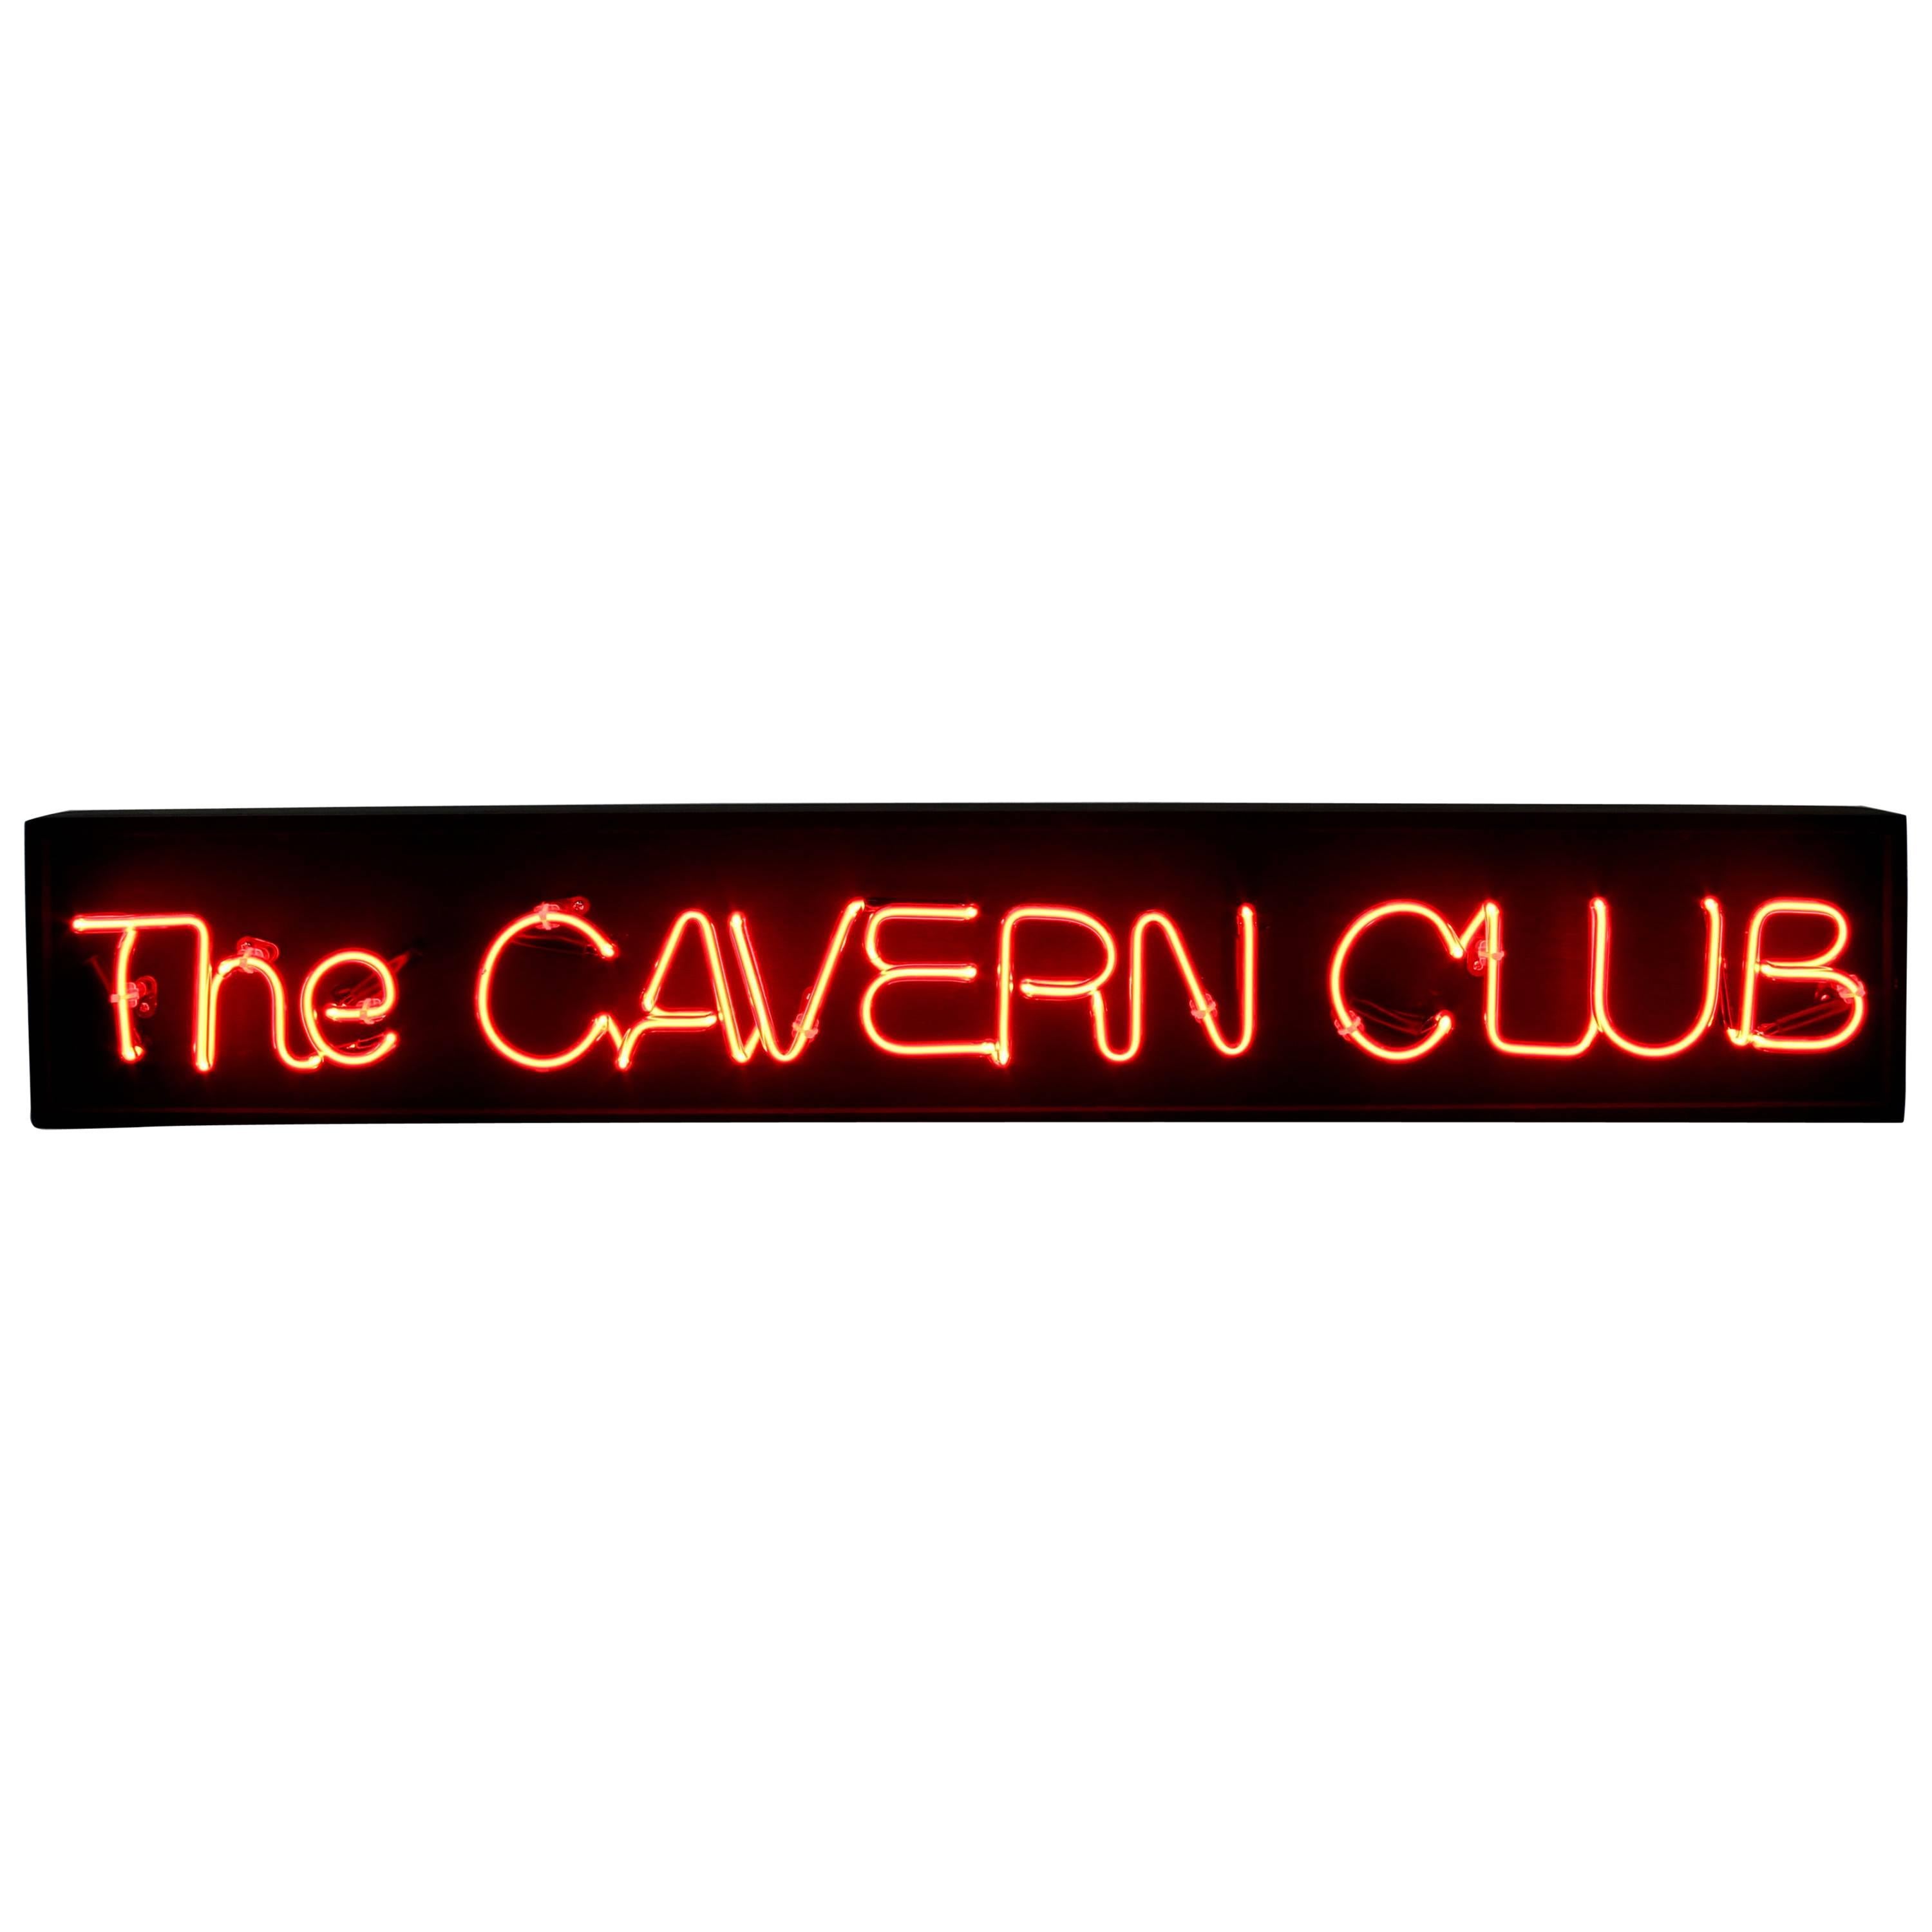 The Cavern Club Neon, Replica of Original Sign For Sale